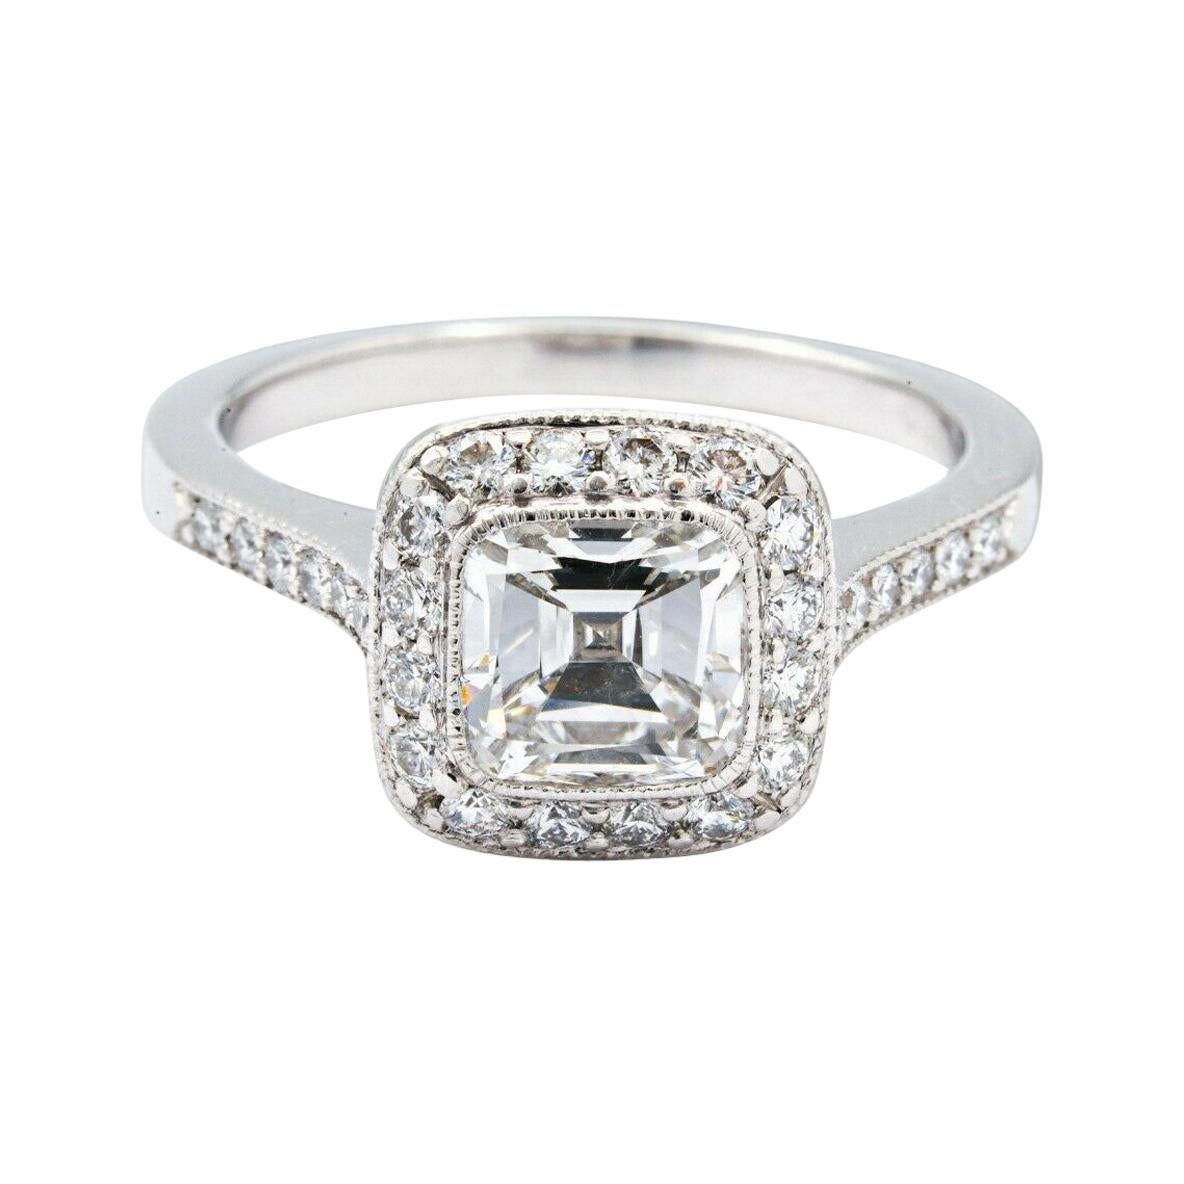 Tiffany & Co. Legacy Cushion Diamond Engagement Ring 1.92 Cts Ttl GVS1 Platinum